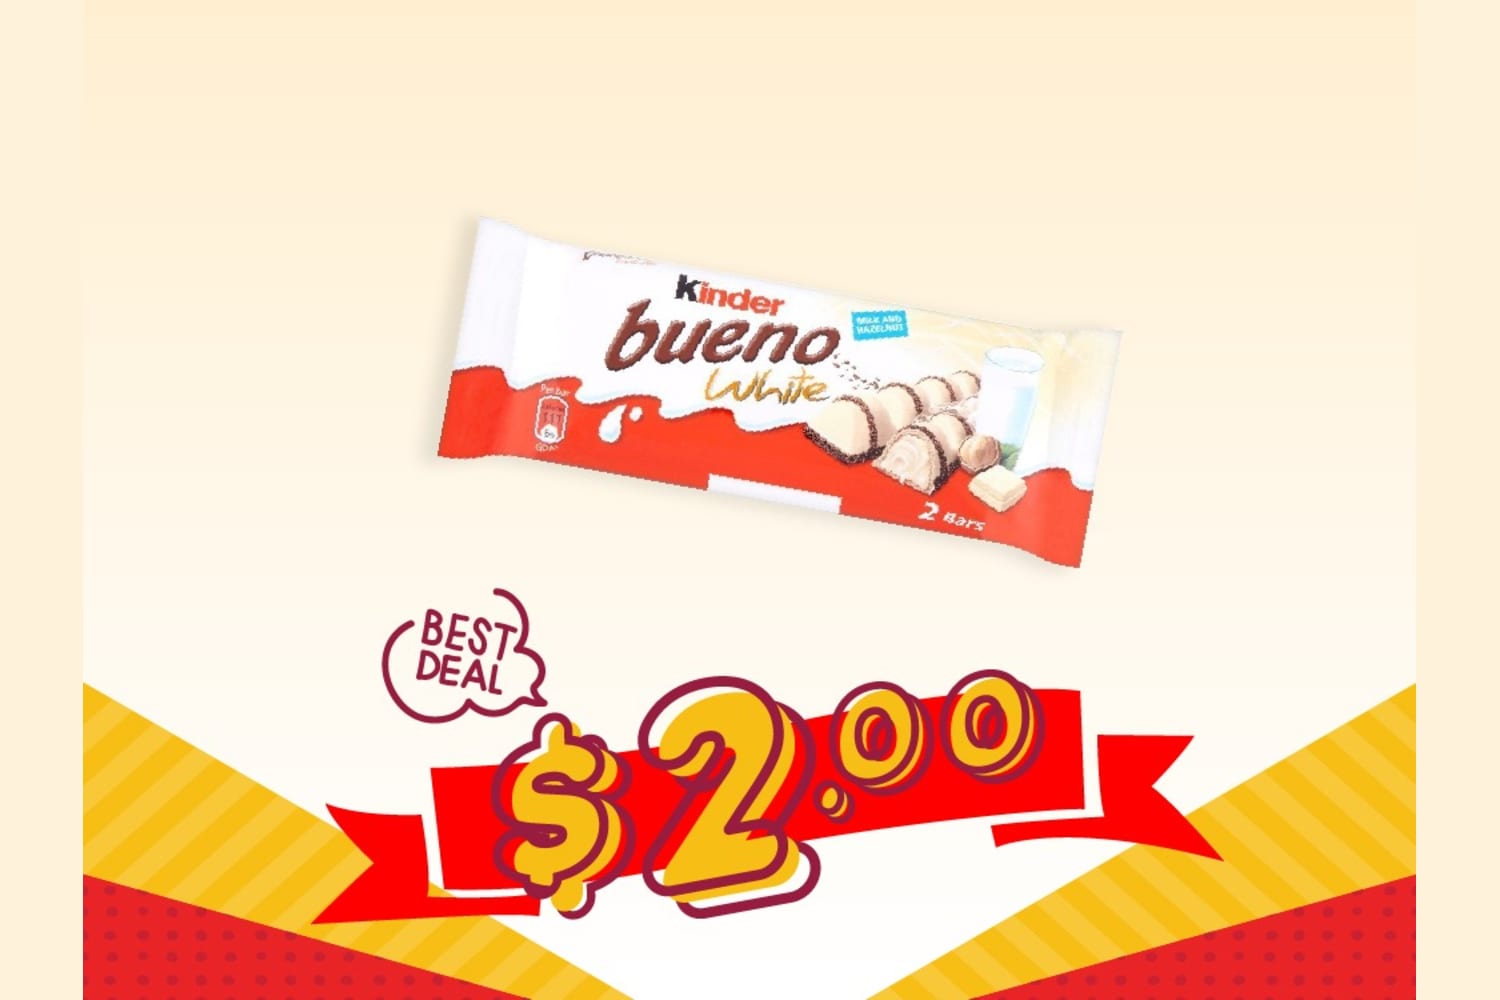 1 x Kinder Bueno Maxi White T2 [Limited Stock] at OleOle Singapore Confectionery & Liquor - Get Deals, Cashback and Rewards with ShopBack GO